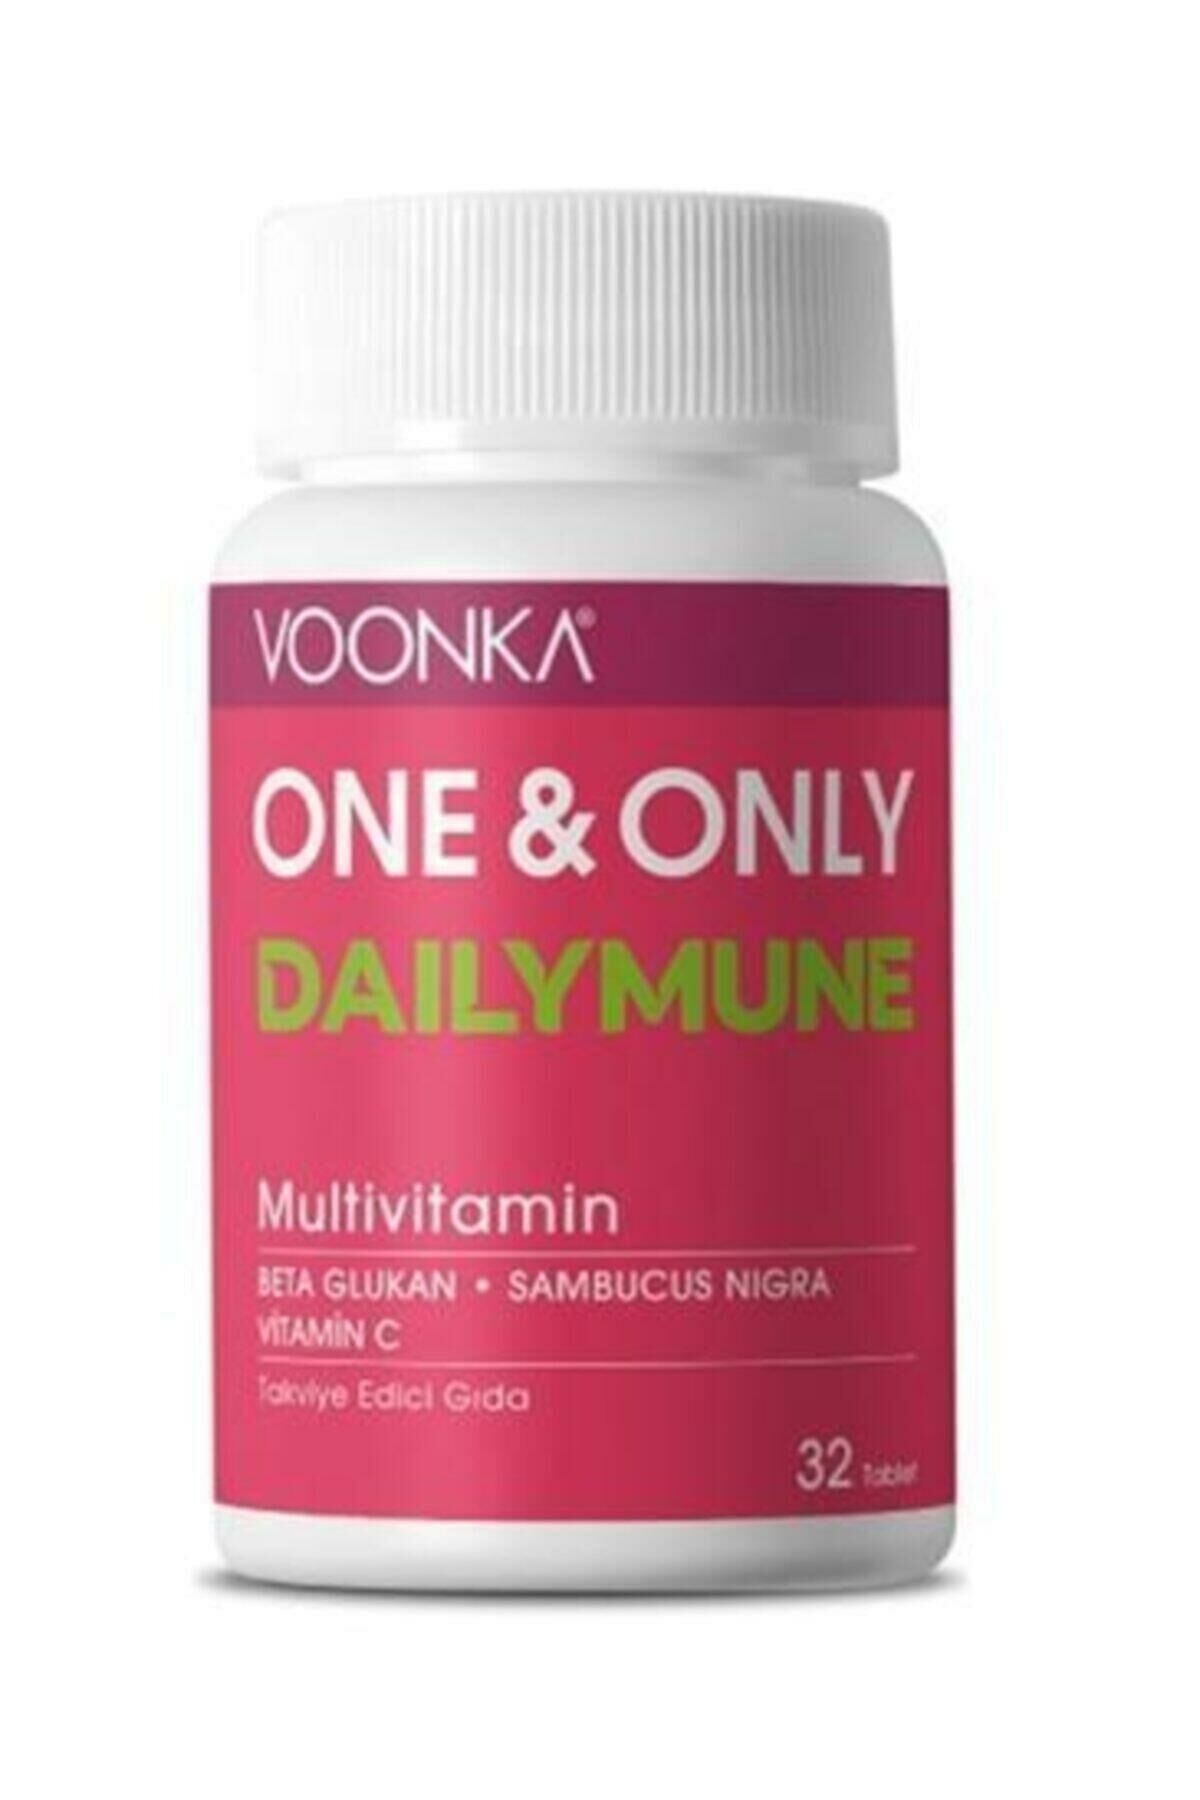 Voonka One&Only Dailymune Multivitamin 32 Tablet